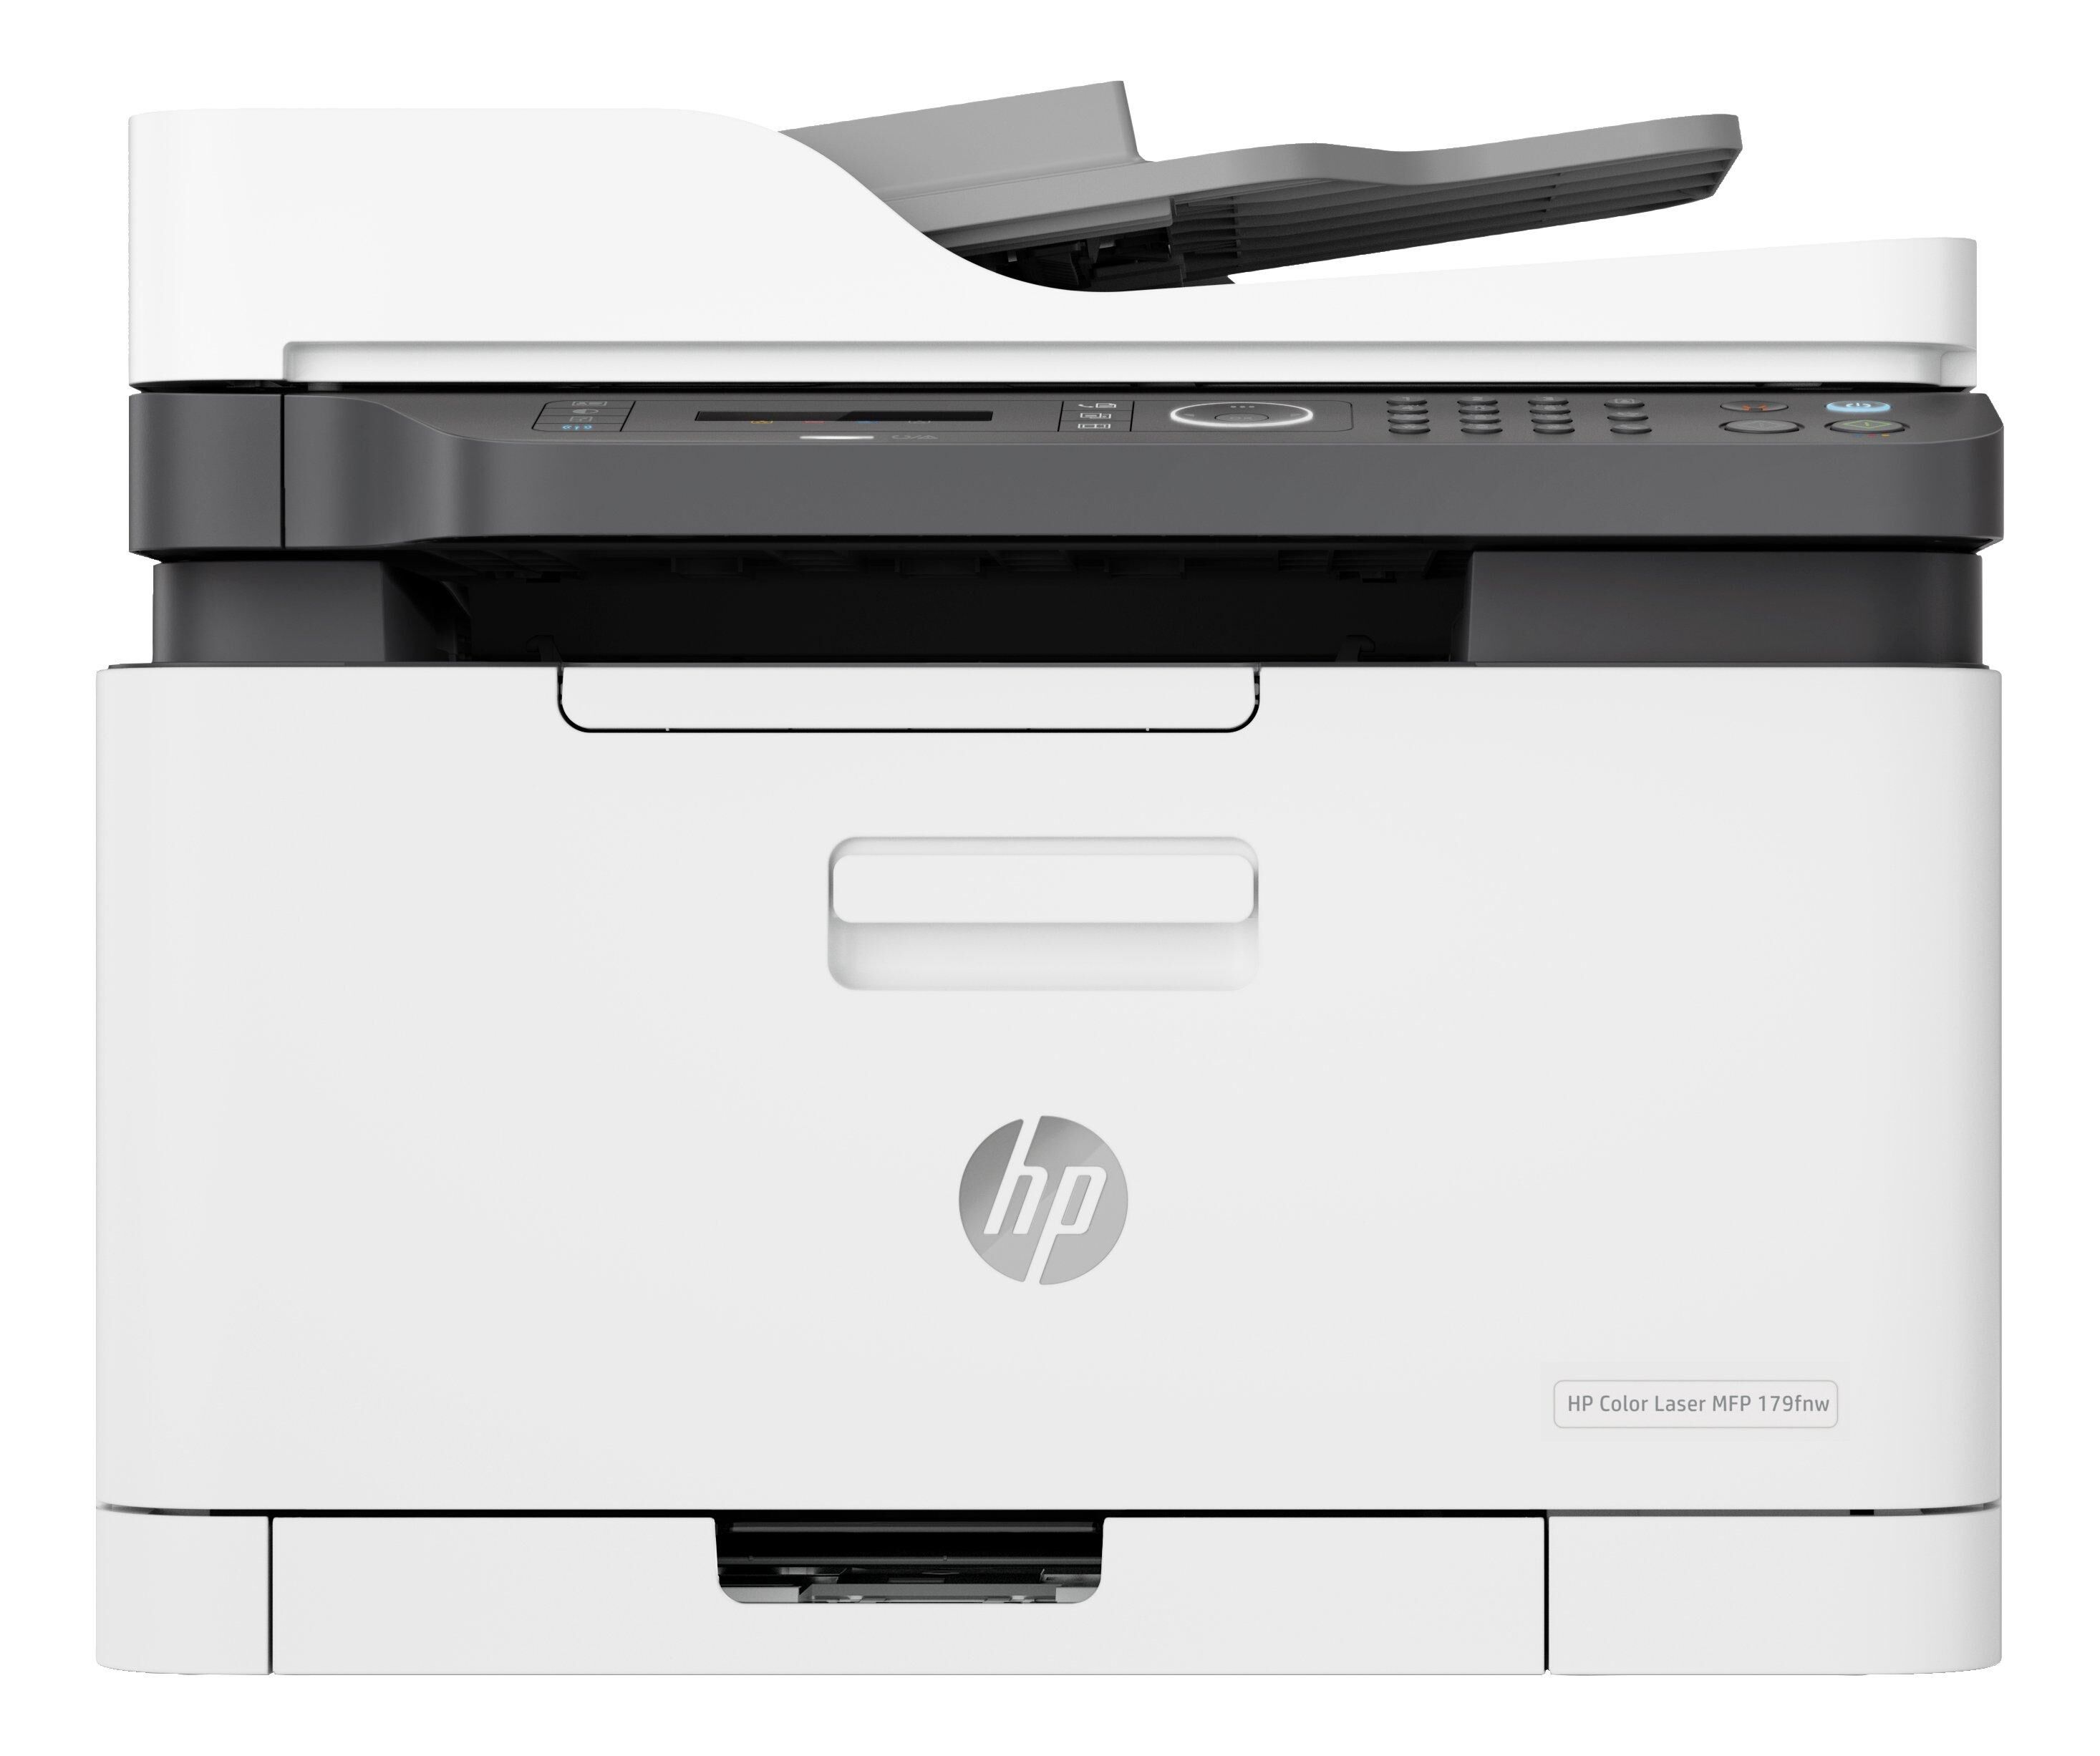 HP Color Laser MFP 179fnw printer